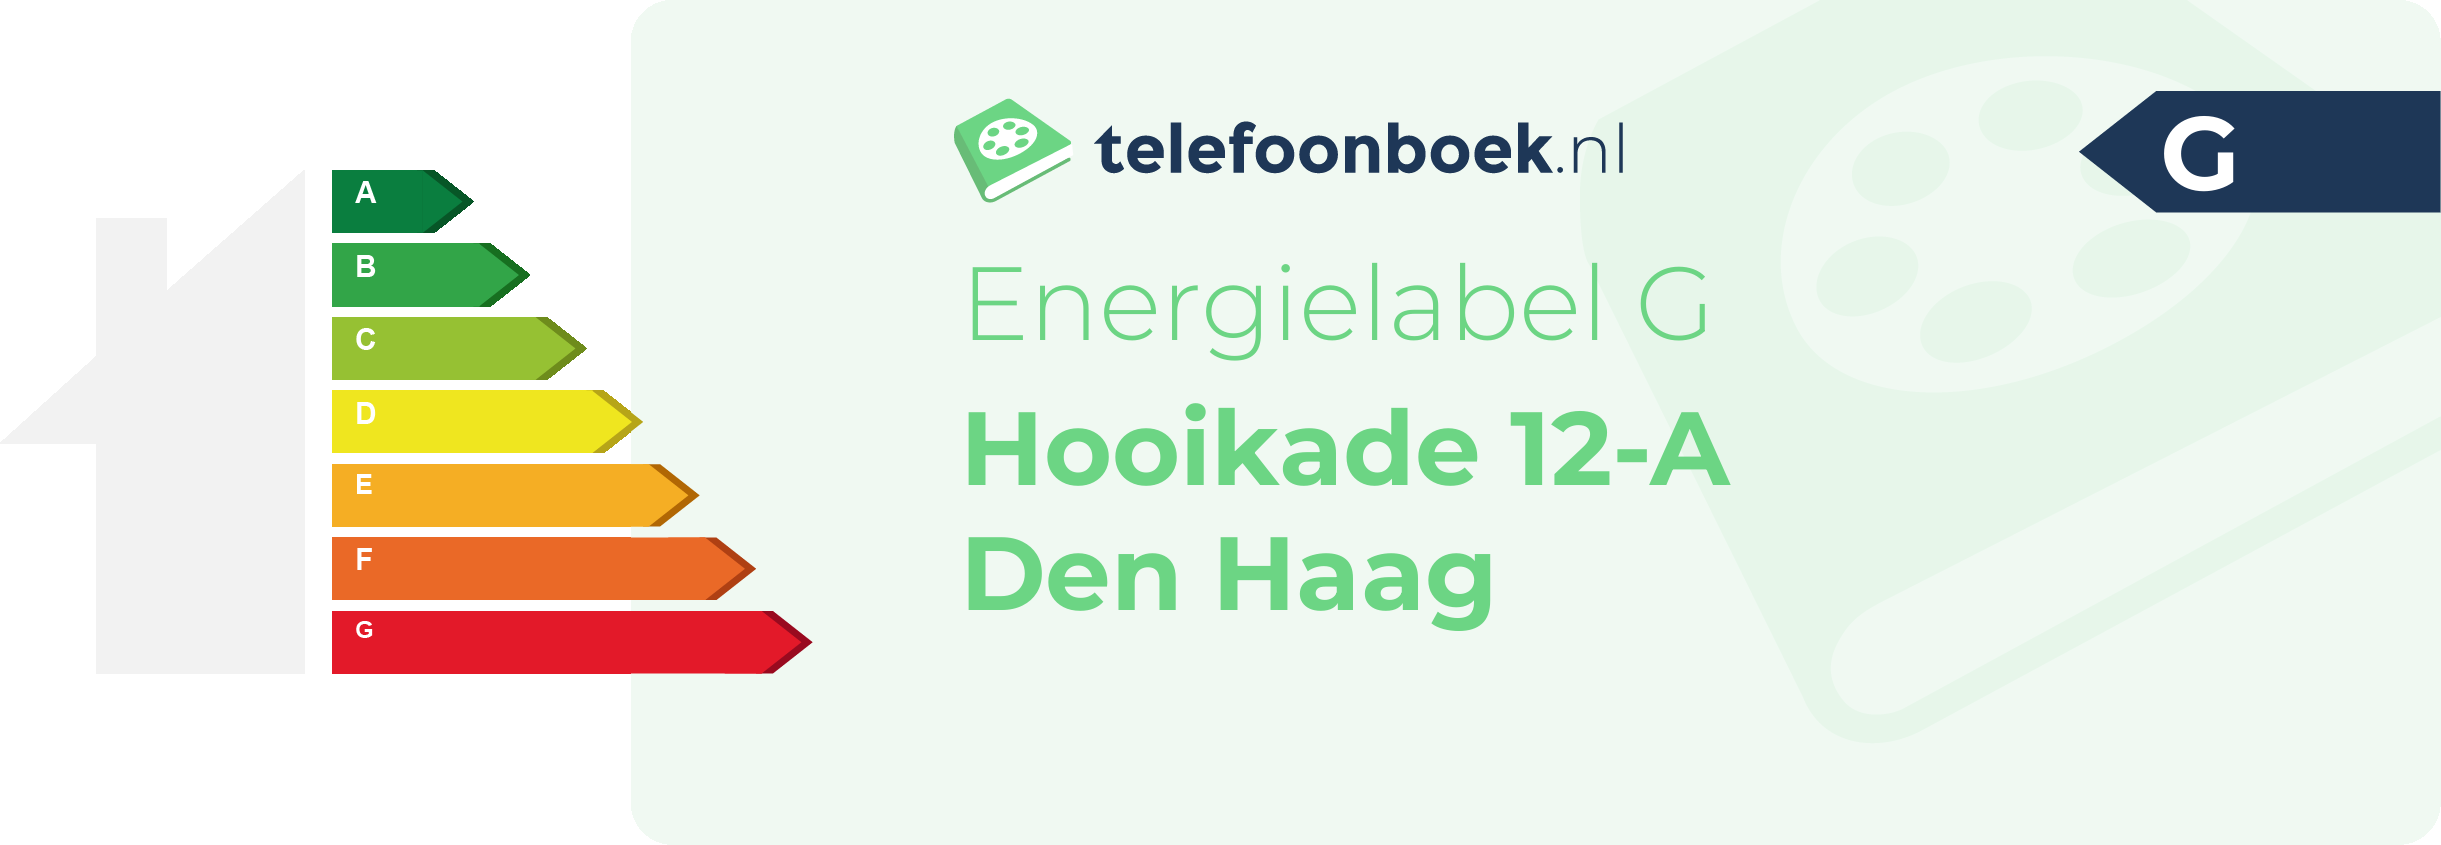 Energielabel Hooikade 12-A Den Haag